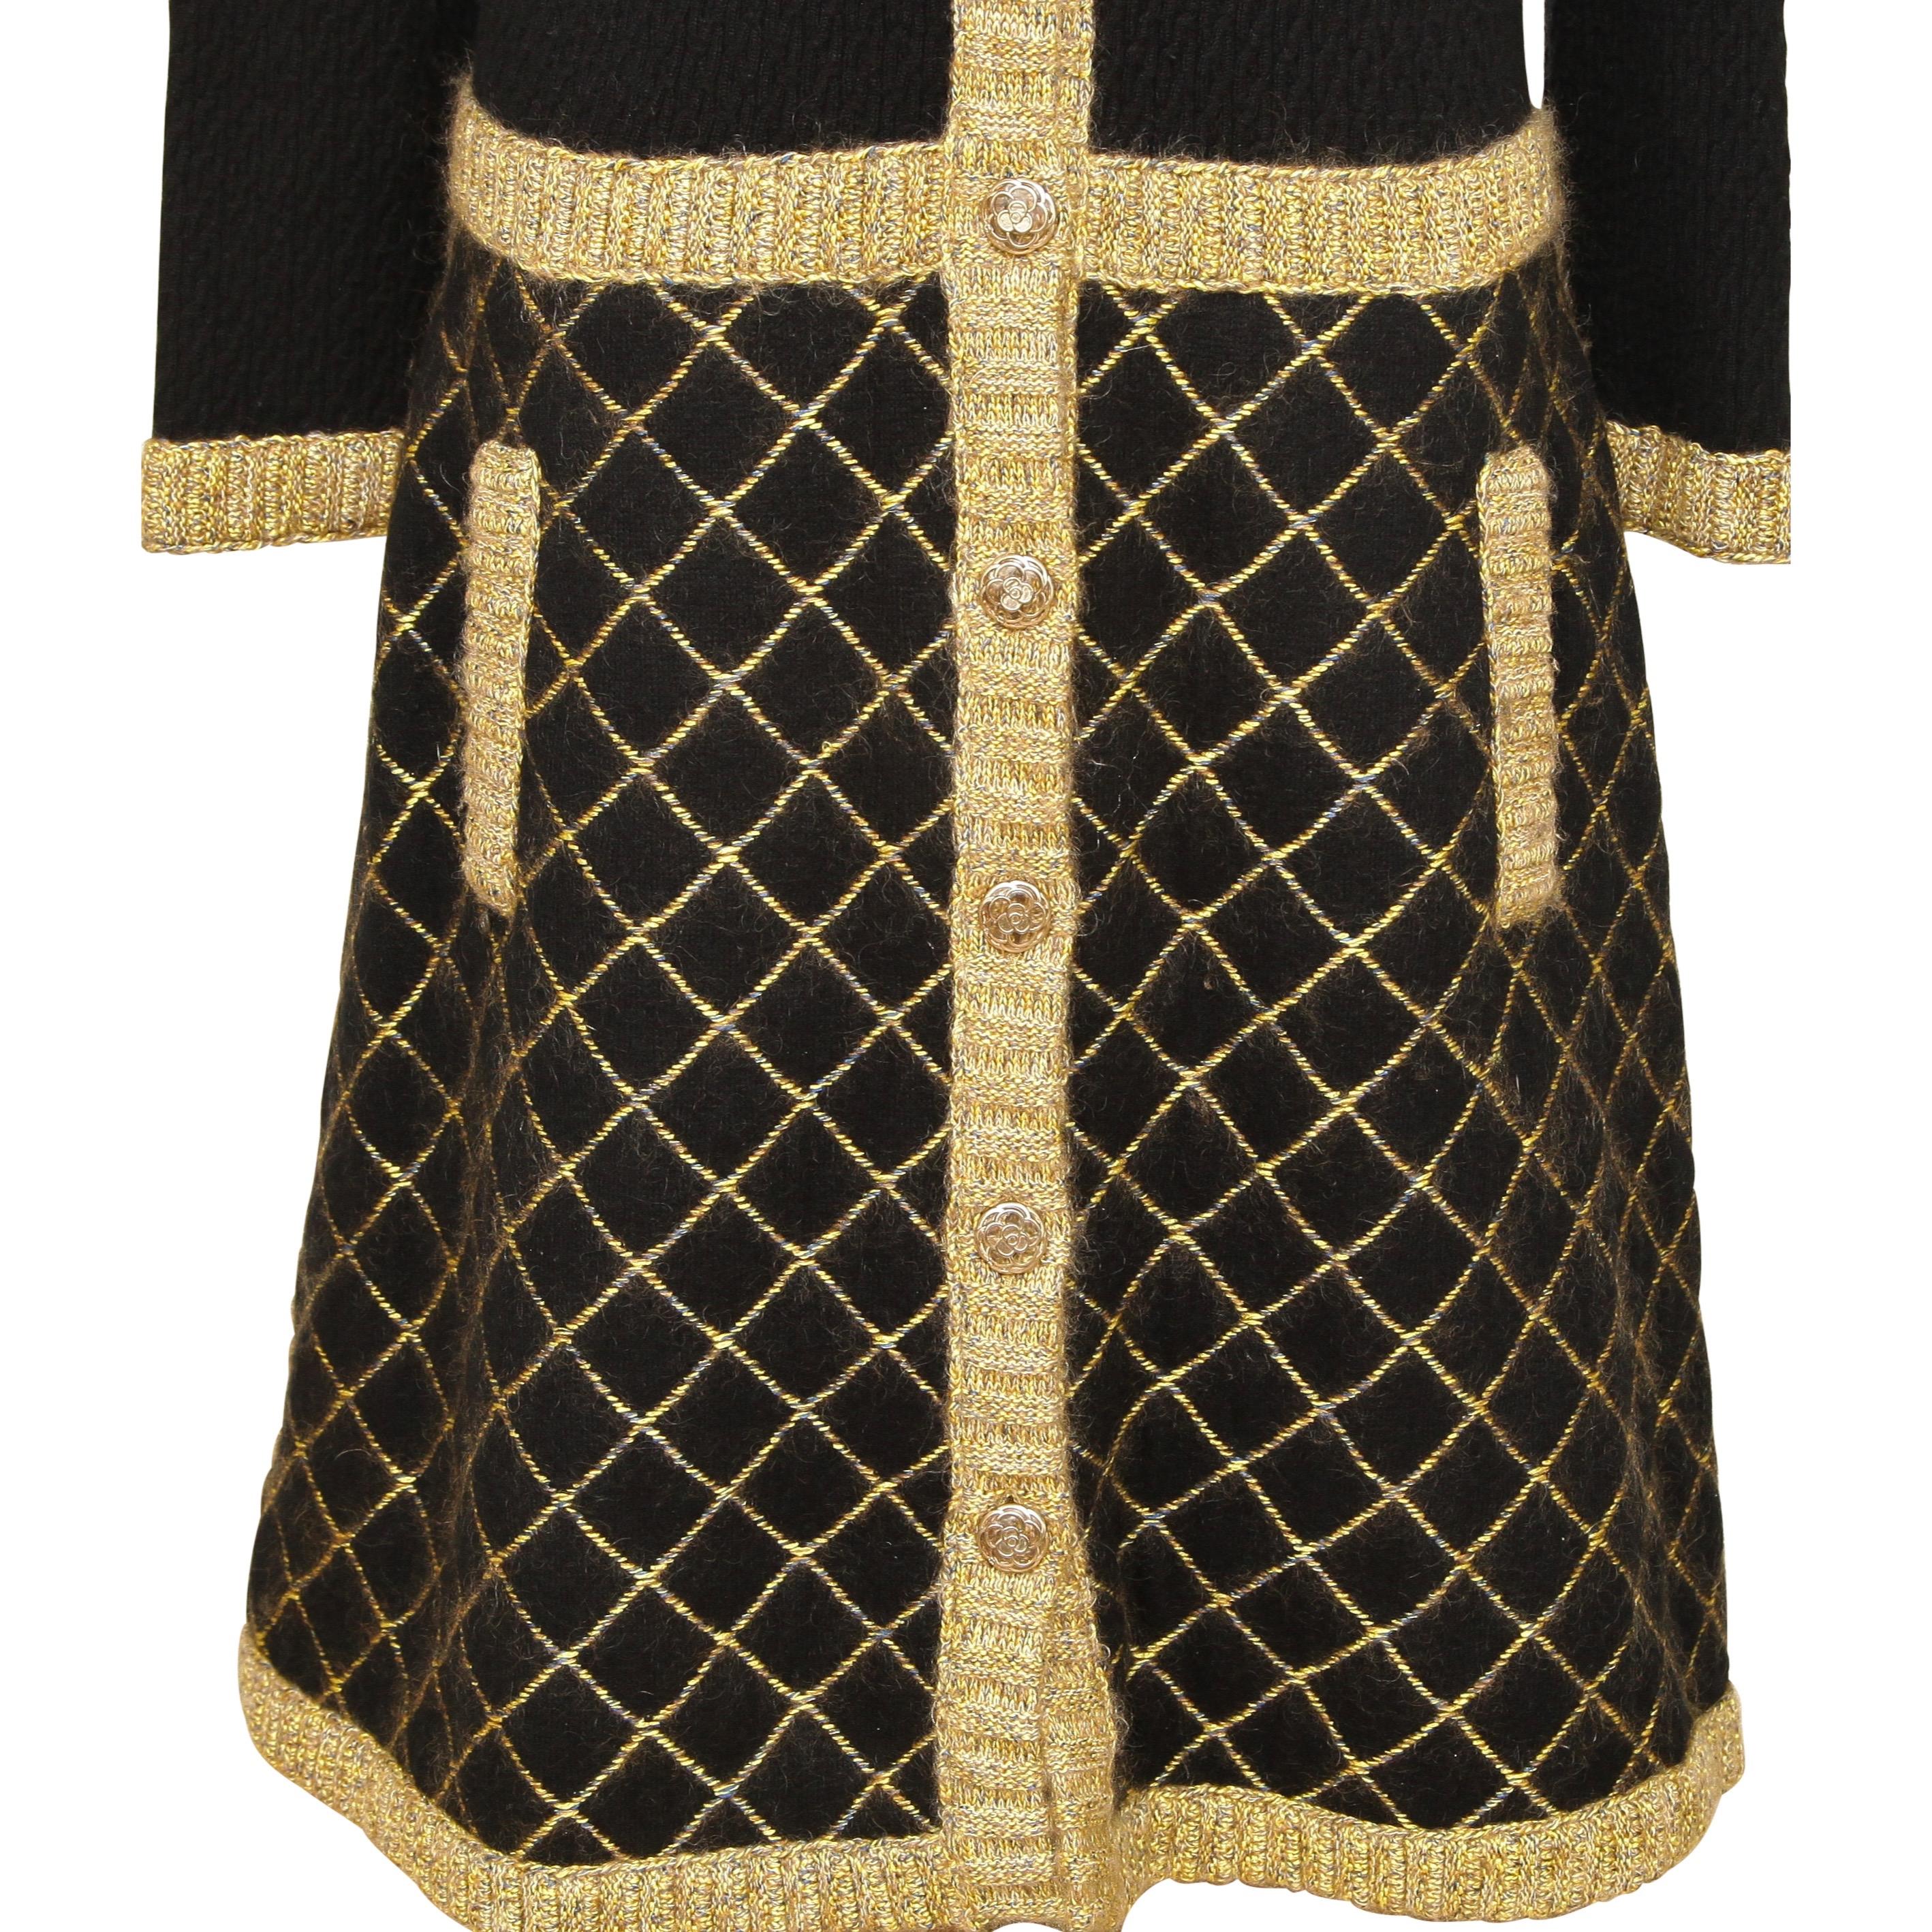 CHANEL Dress Knit Sweater Black Gold Camellia Long Sleeve Cashmere Sz 42 2015 3